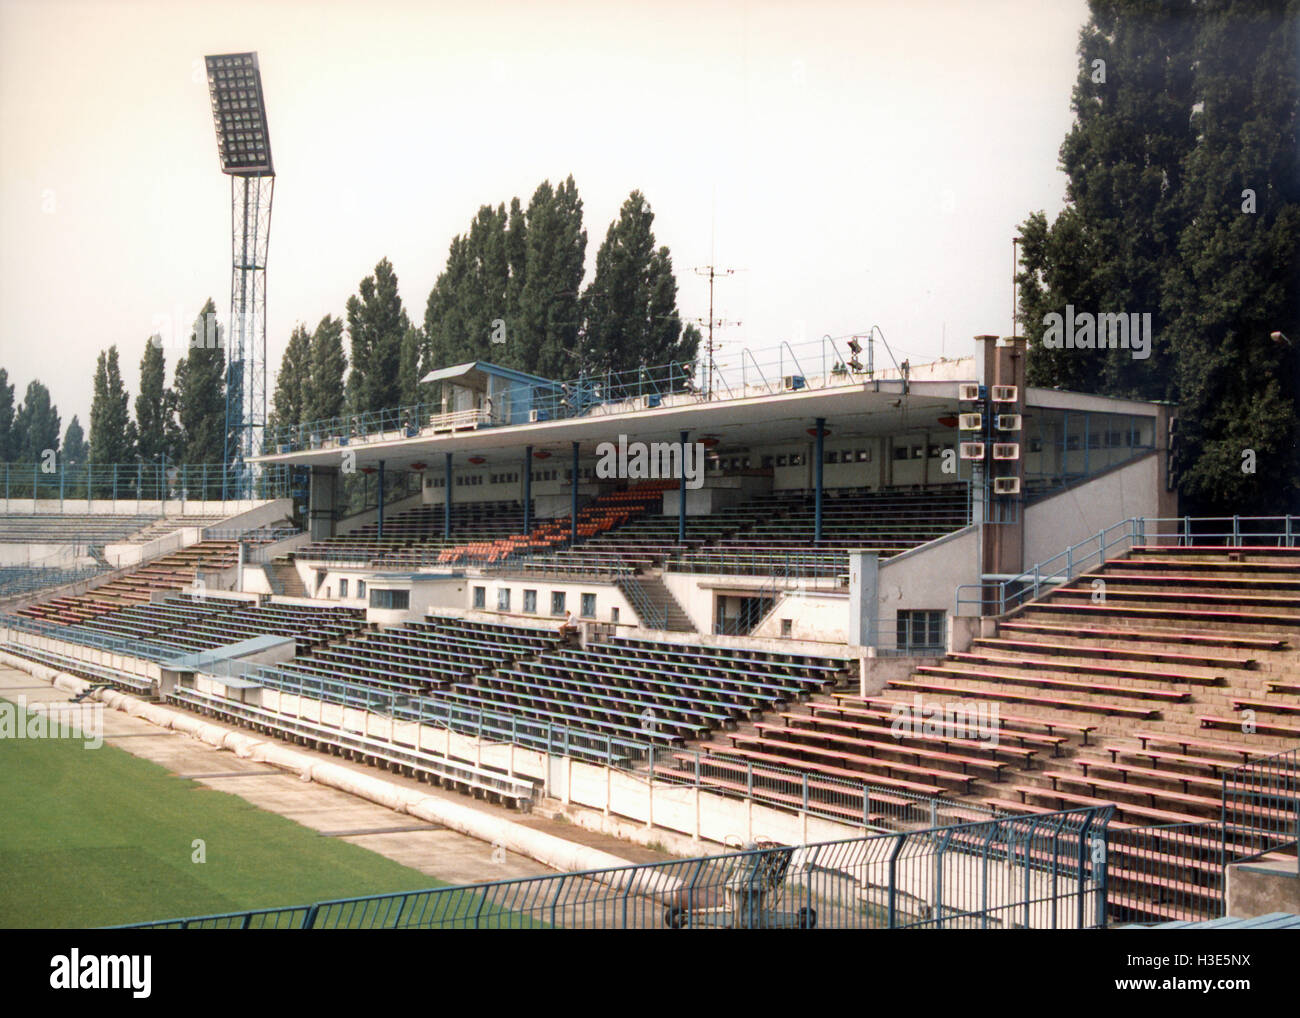 Tehelne Pole, home of SK Slovan Bratislava, pictured in August 1996 Stock Photo